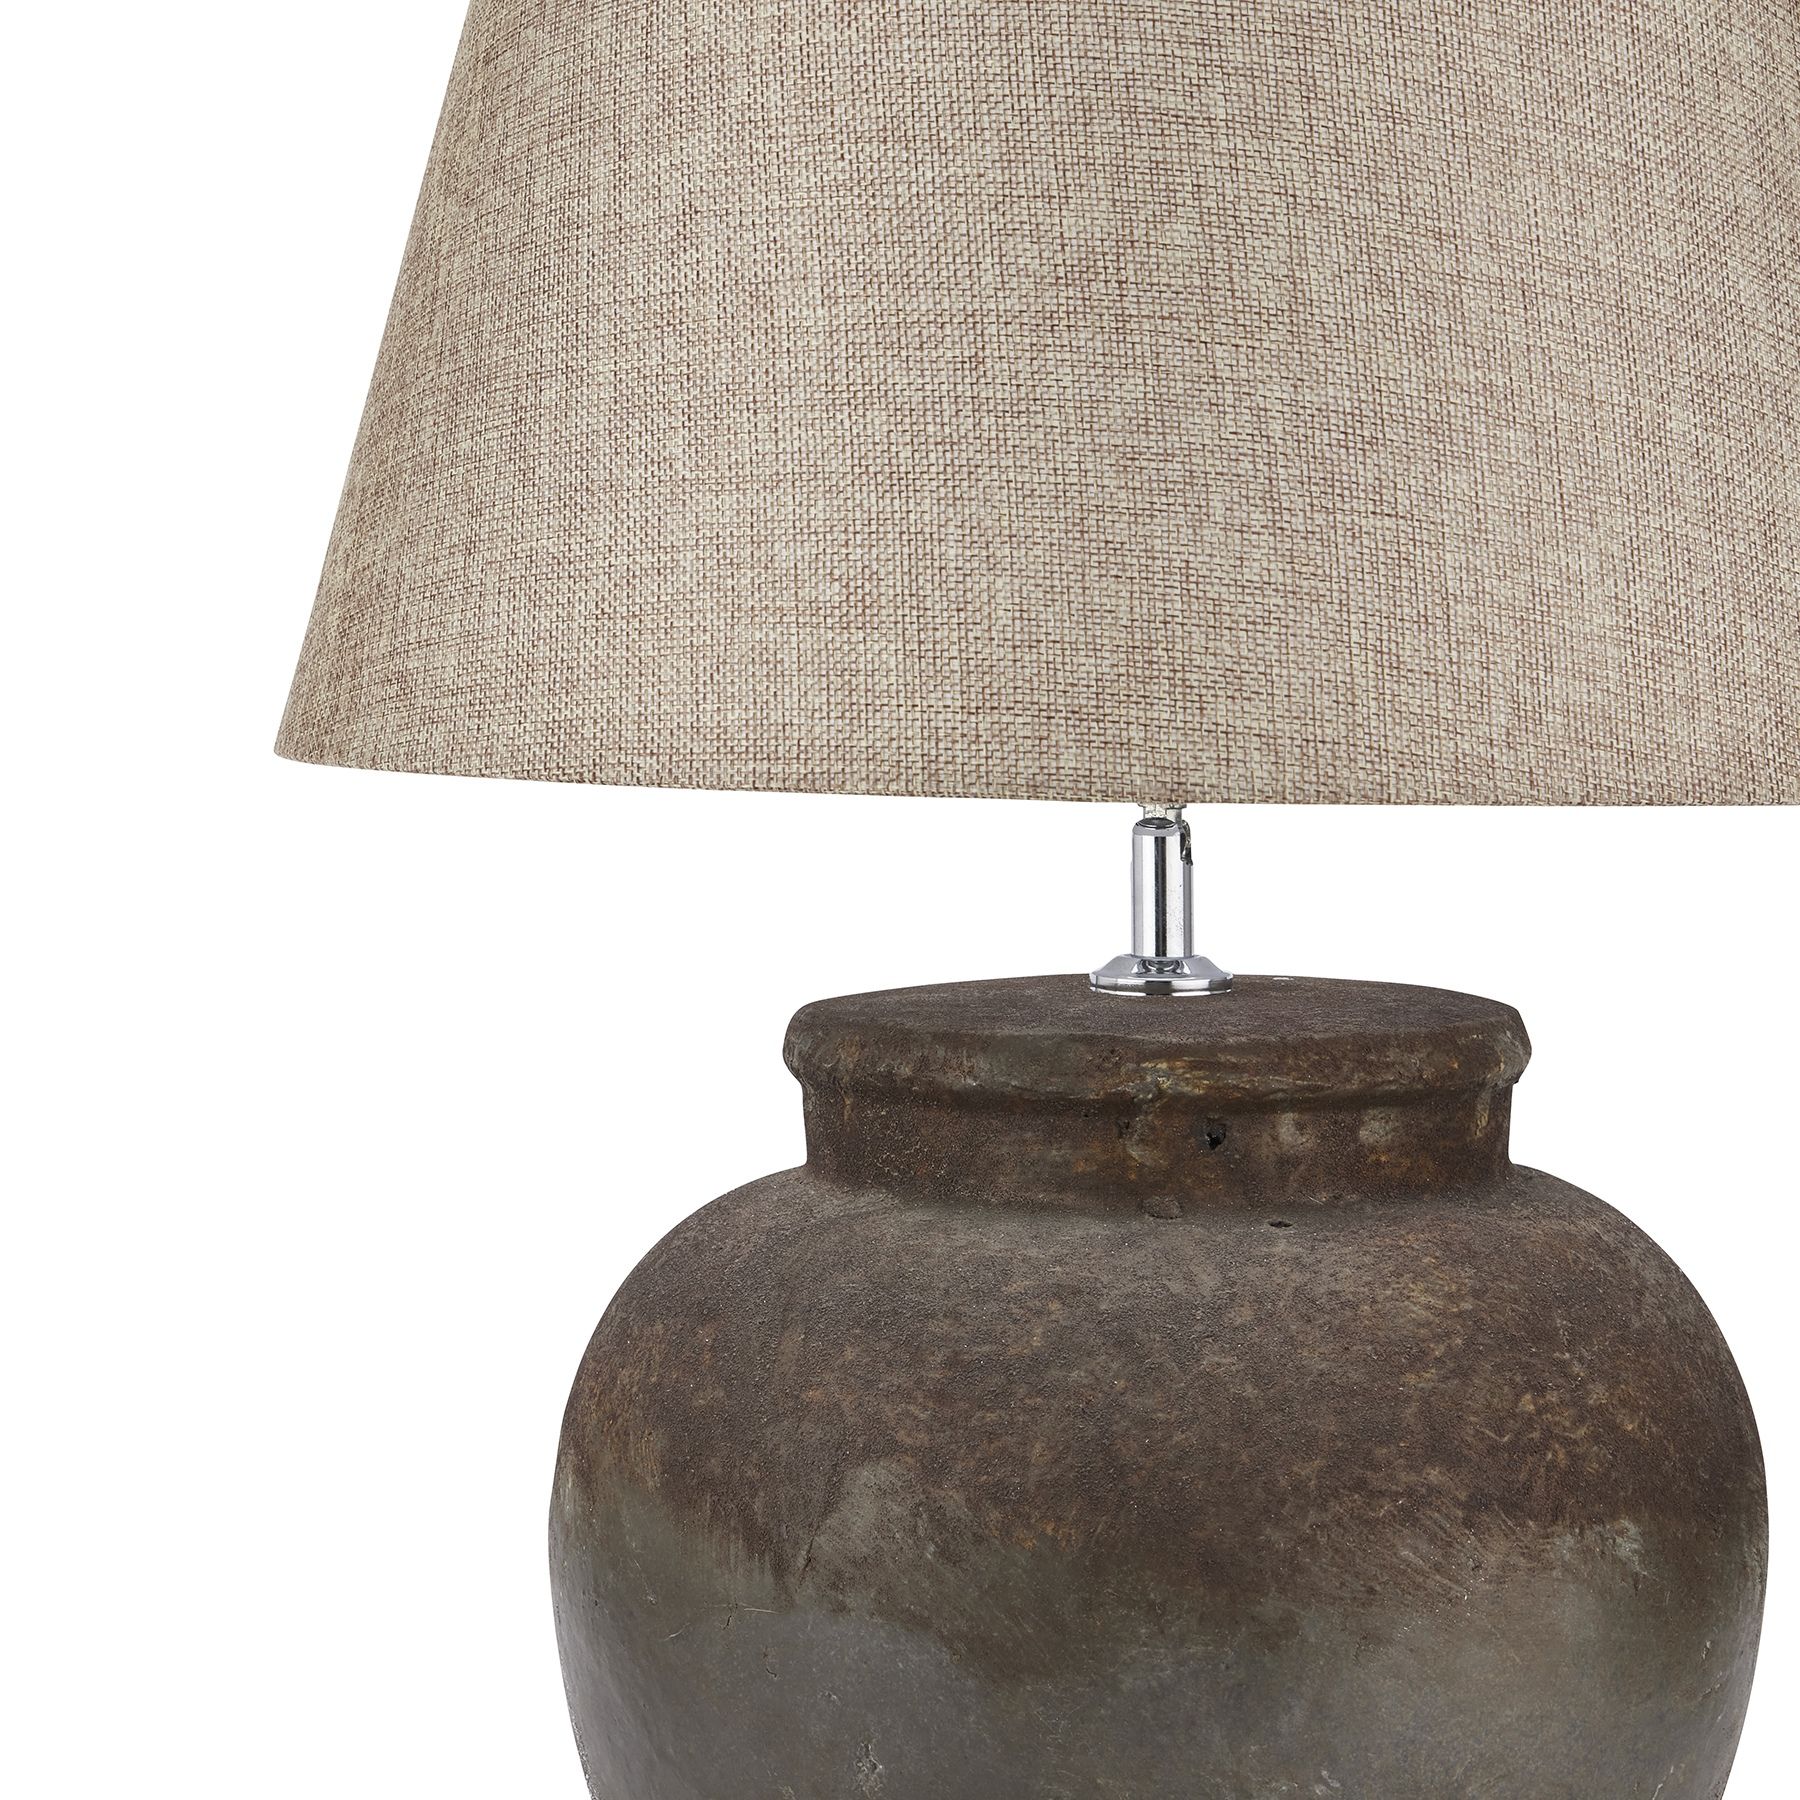 Castello Aged Stone Ceramic Table Lamp - Image 2